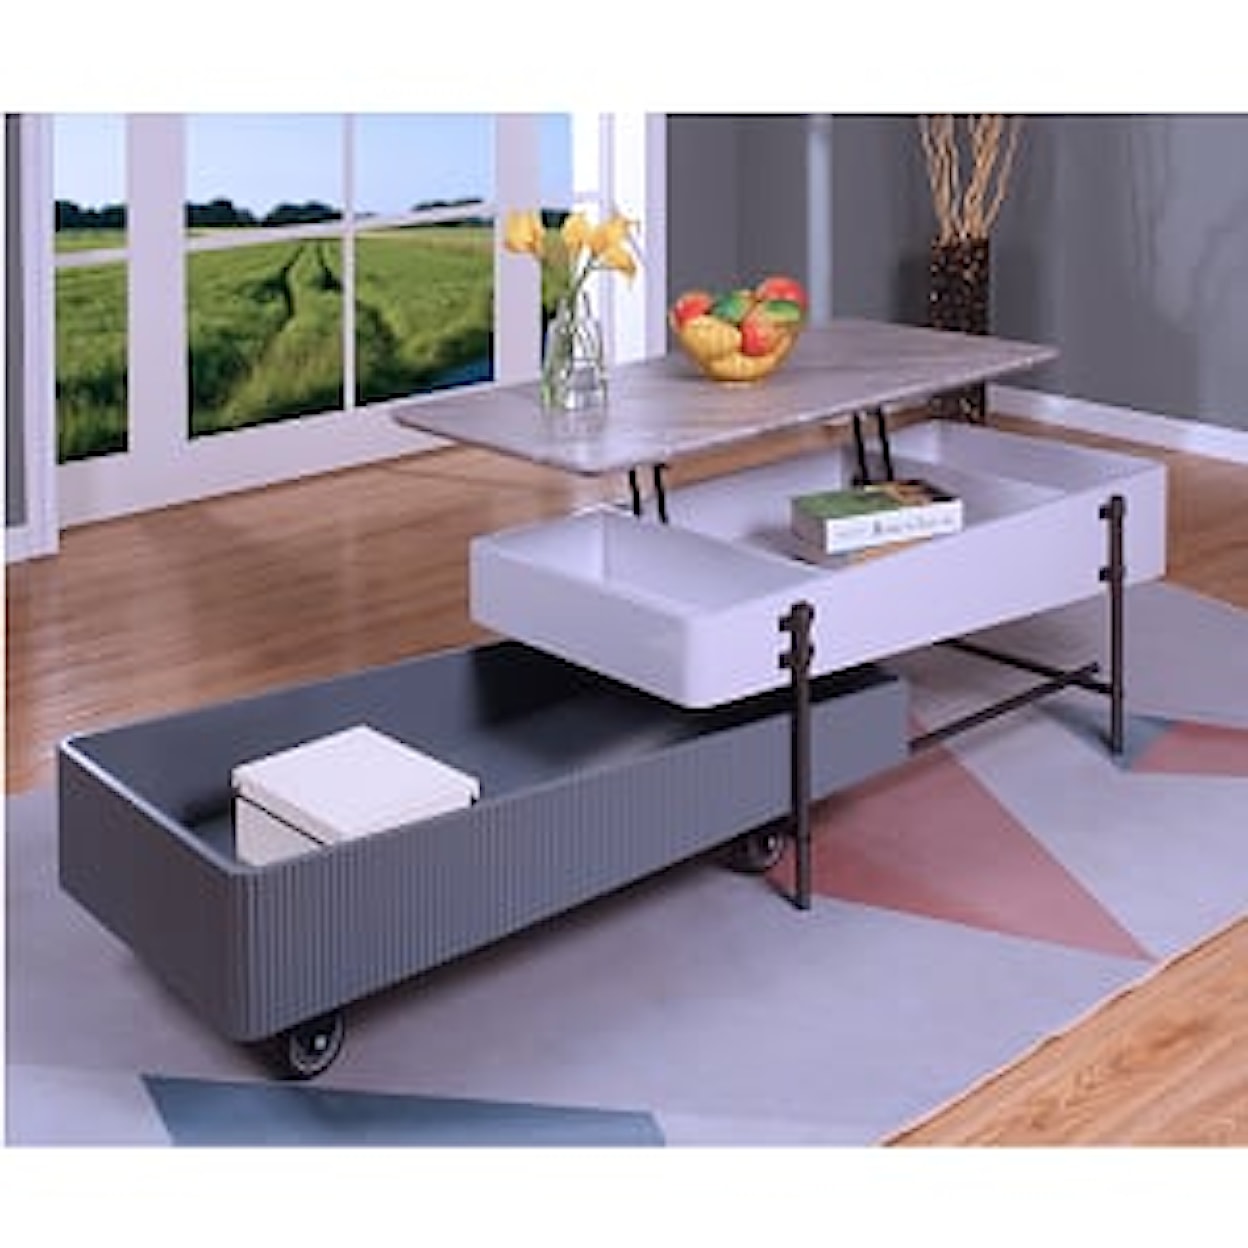 Acme Furniture Wilkins Coffee Table W/Lift Top